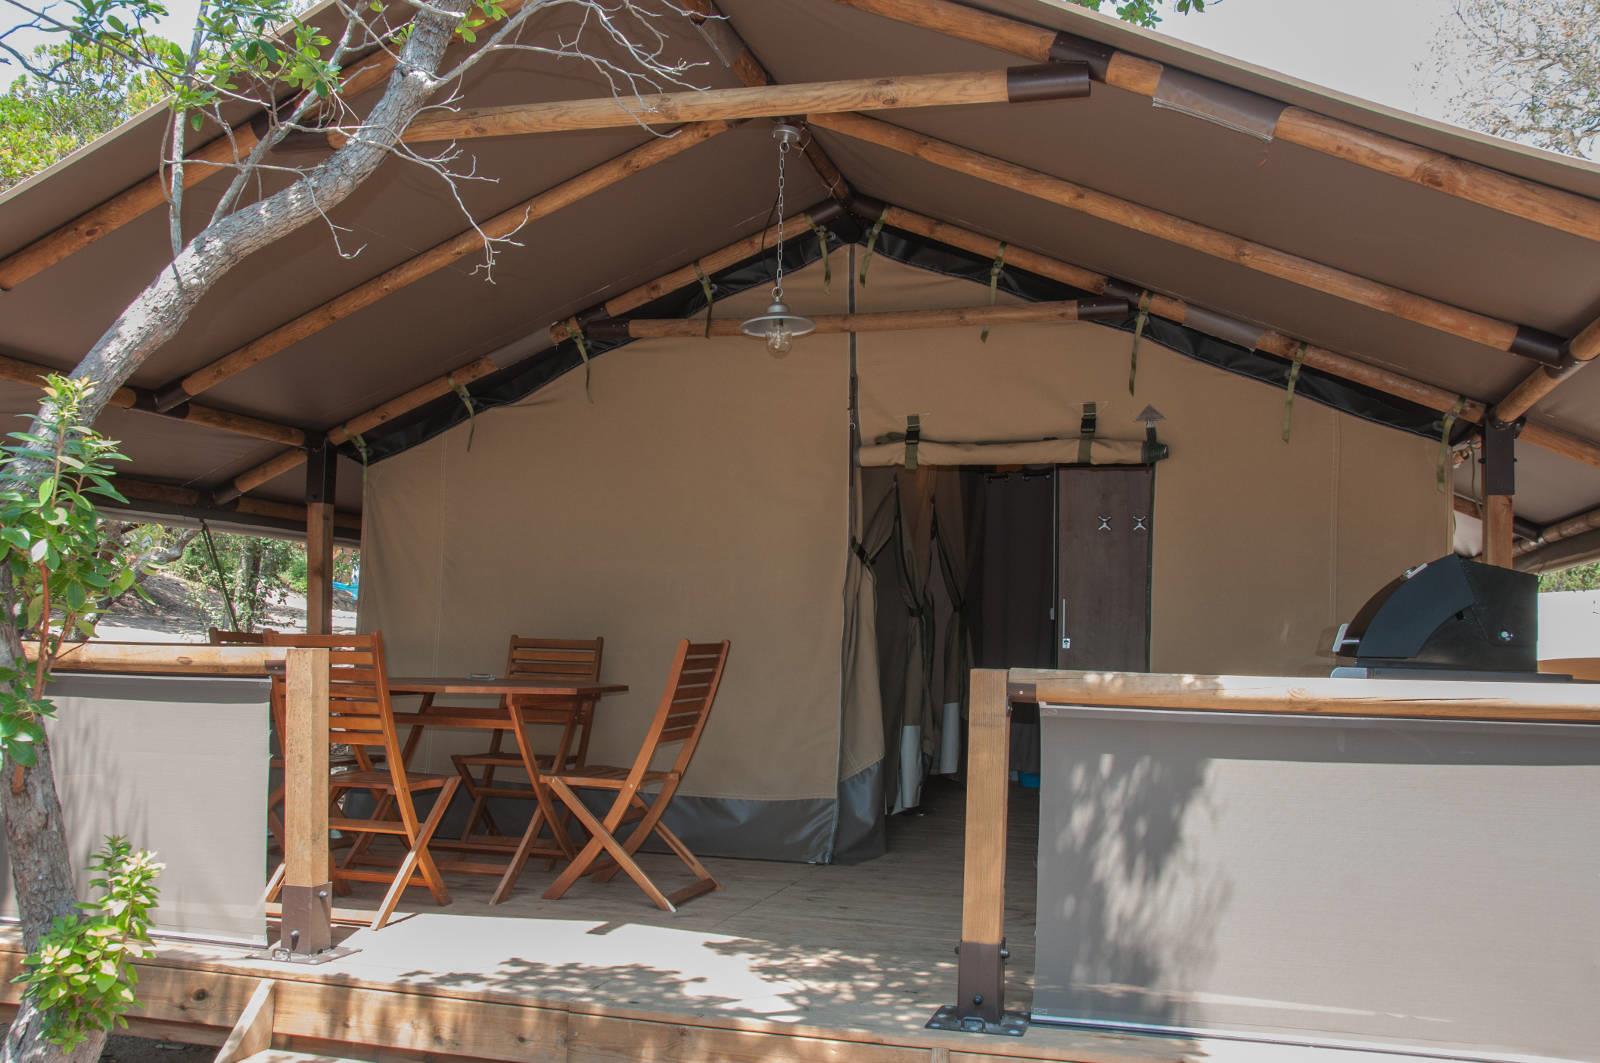 Location - Lodge Kenya 34.5M² - 2 Chambres - Terrasse 10M² (Avec Sanitaires) - Camping le Damier